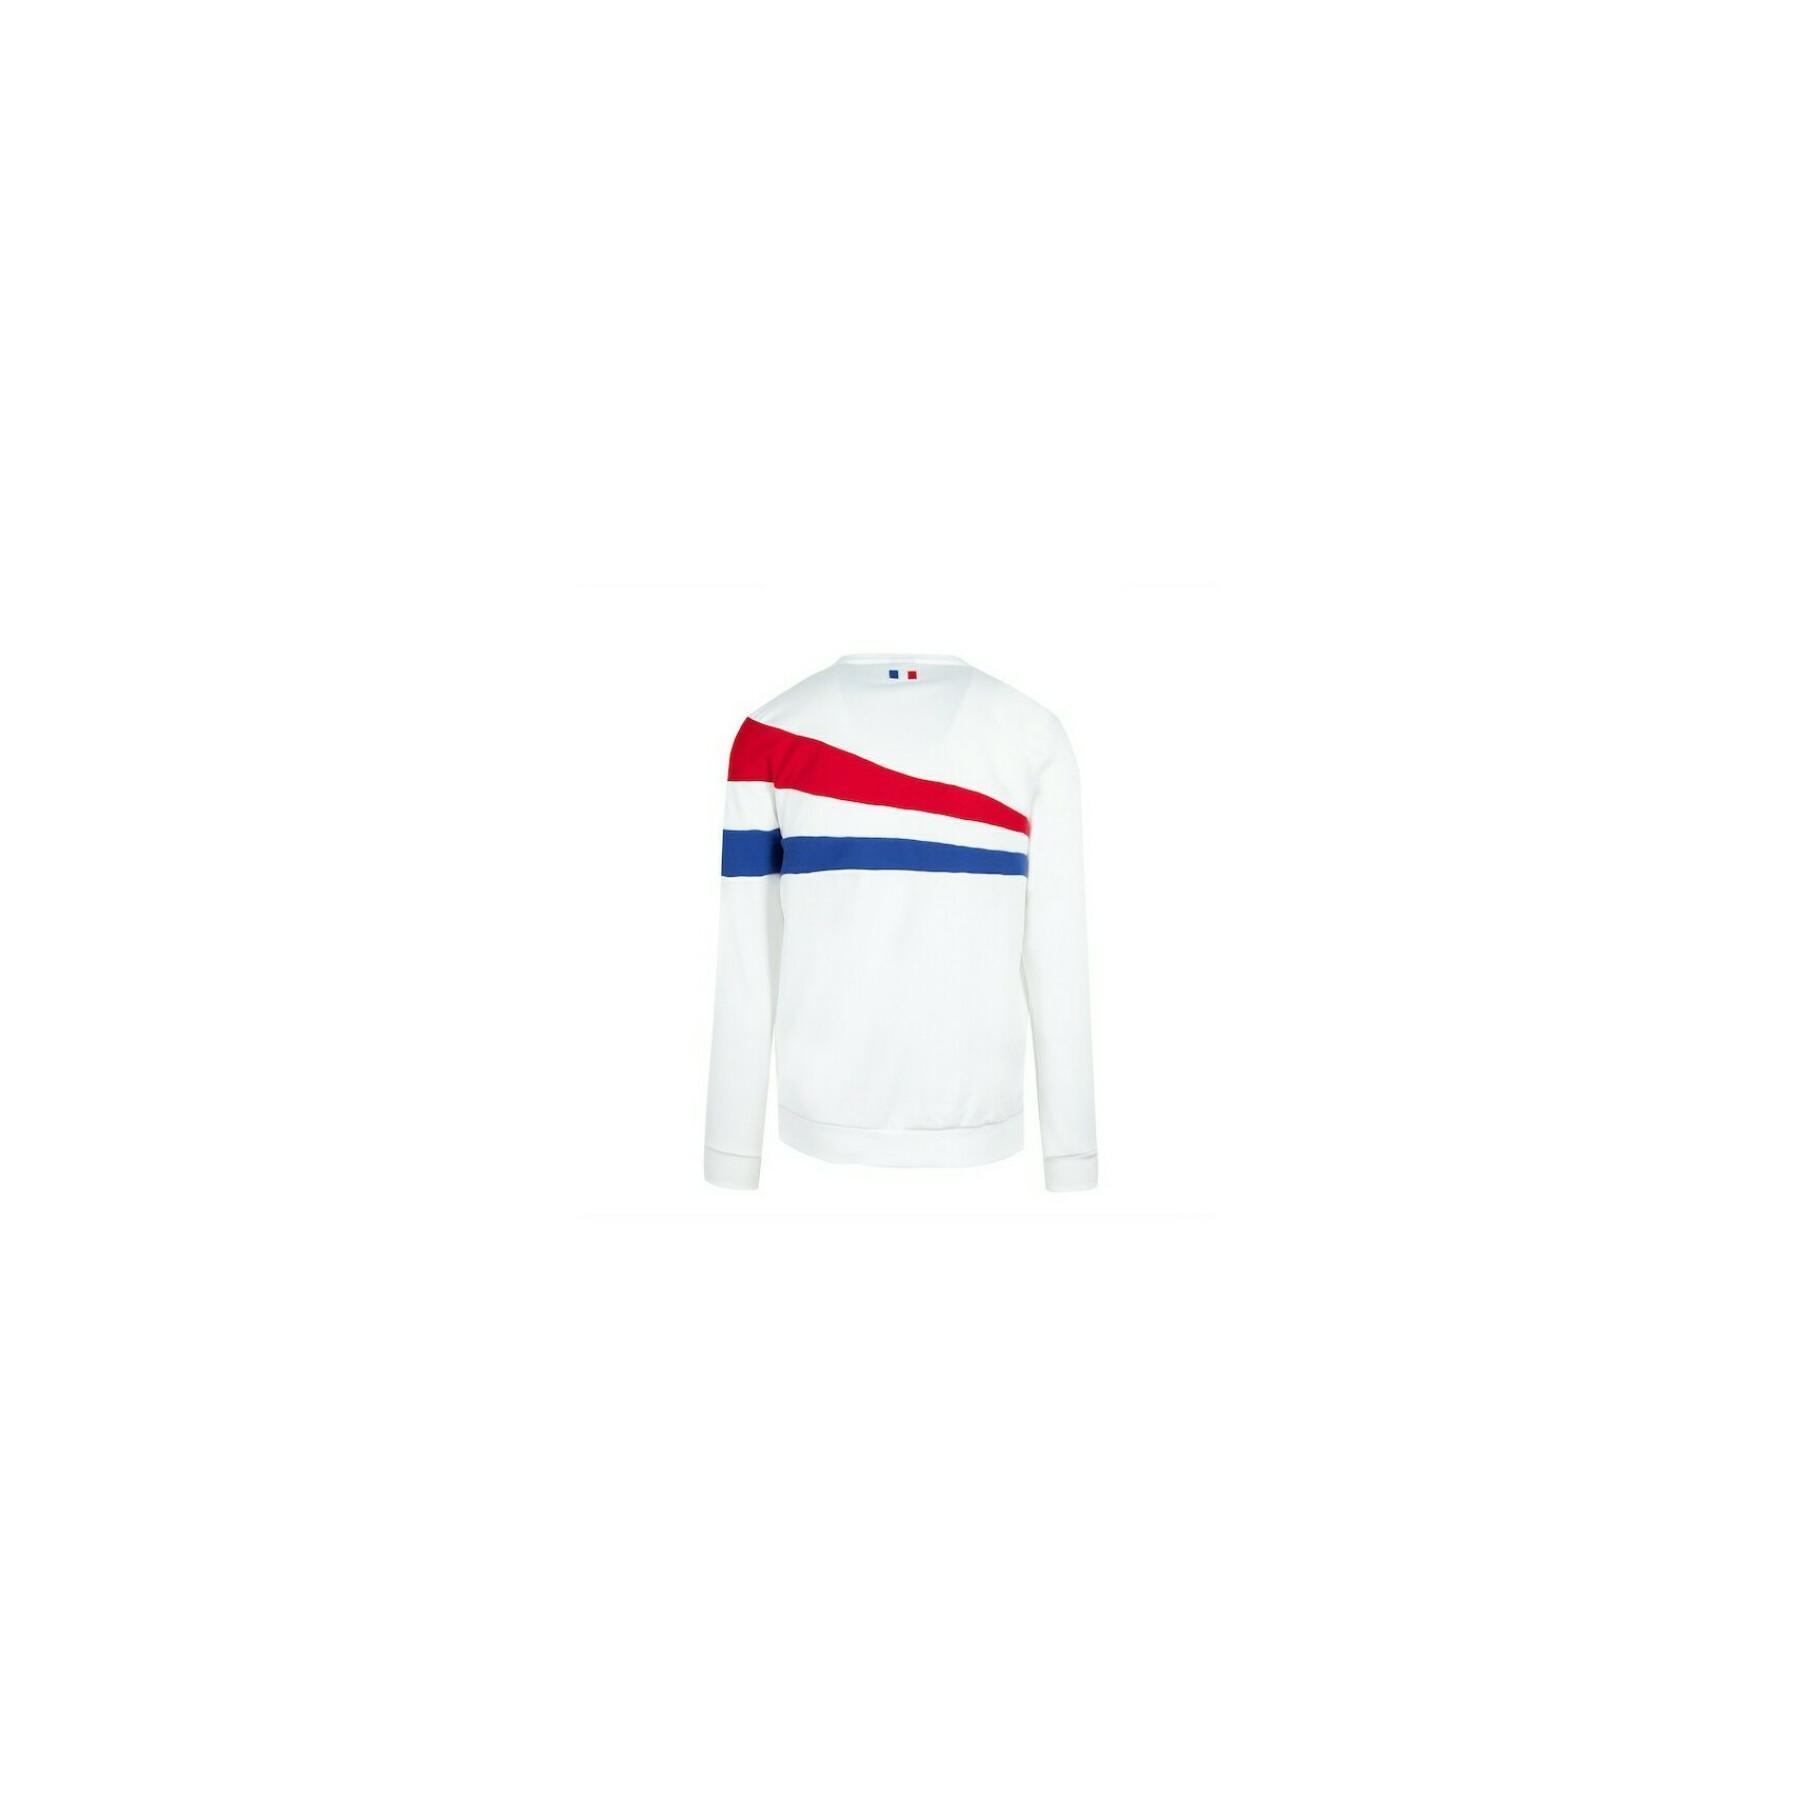 xv zip-up sweatshirt from France 2021/22